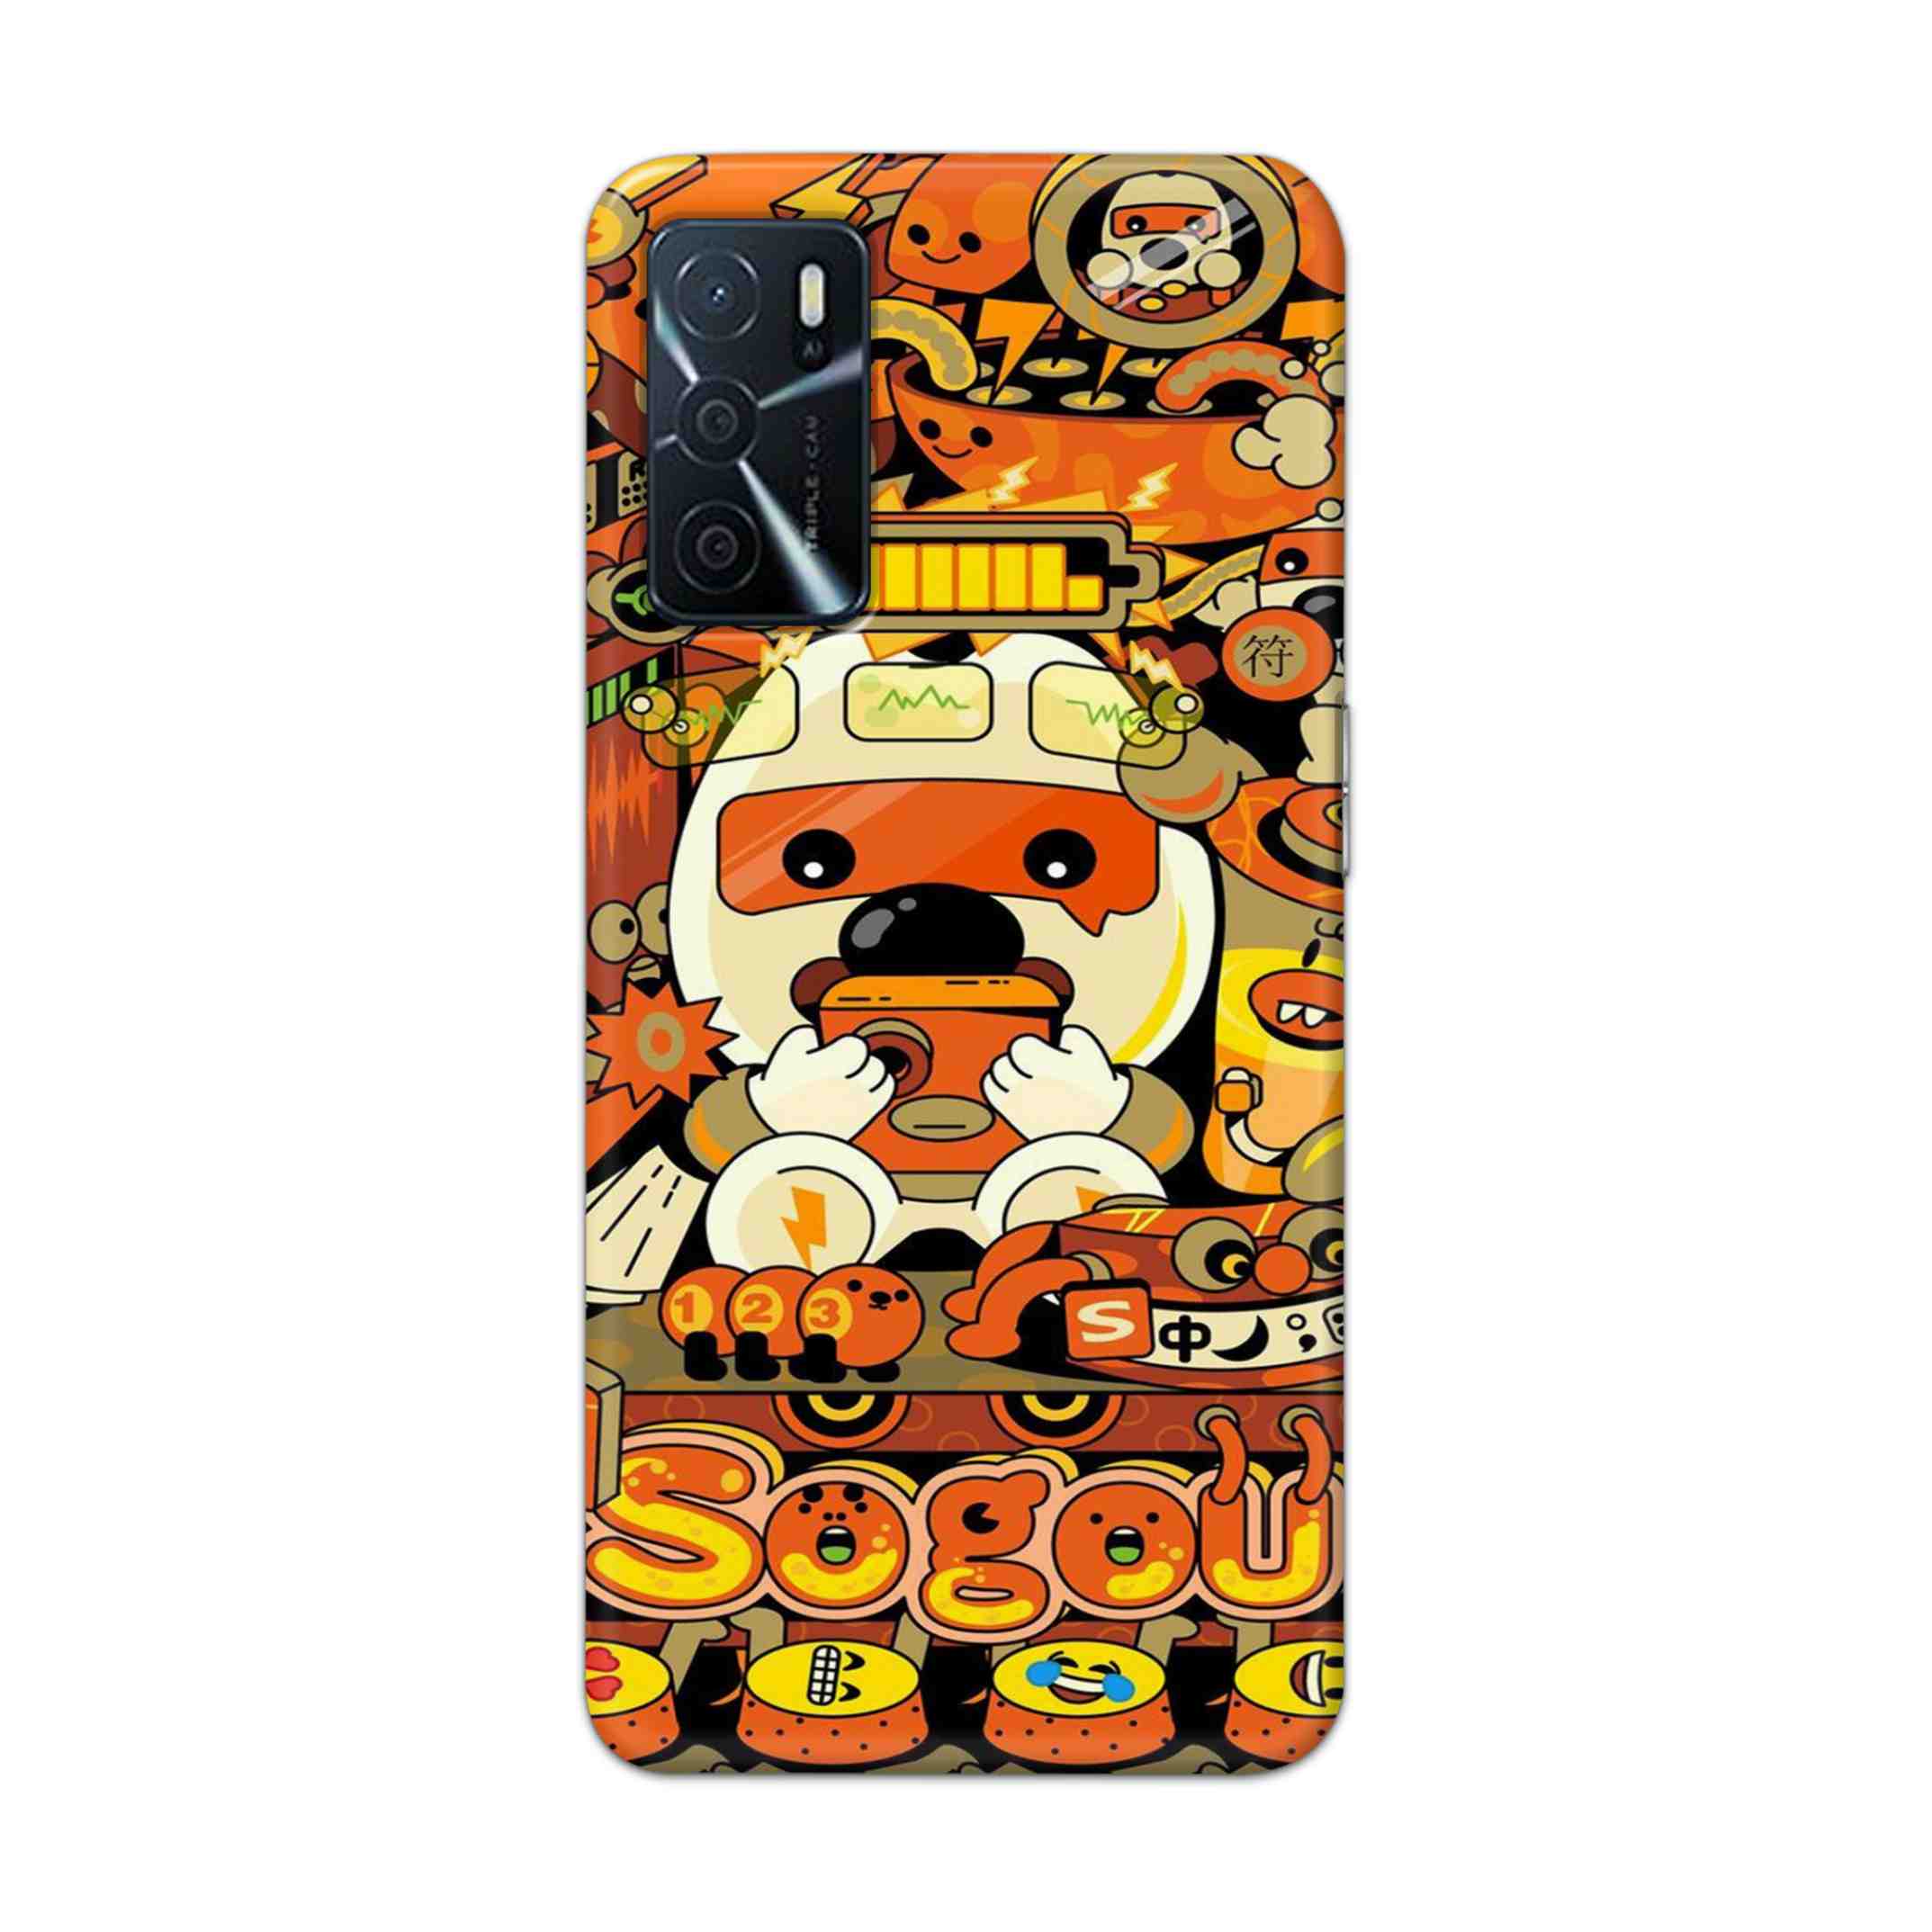 Buy Sogou Hard Back Mobile Phone Case Cover For Oppo A16 Online